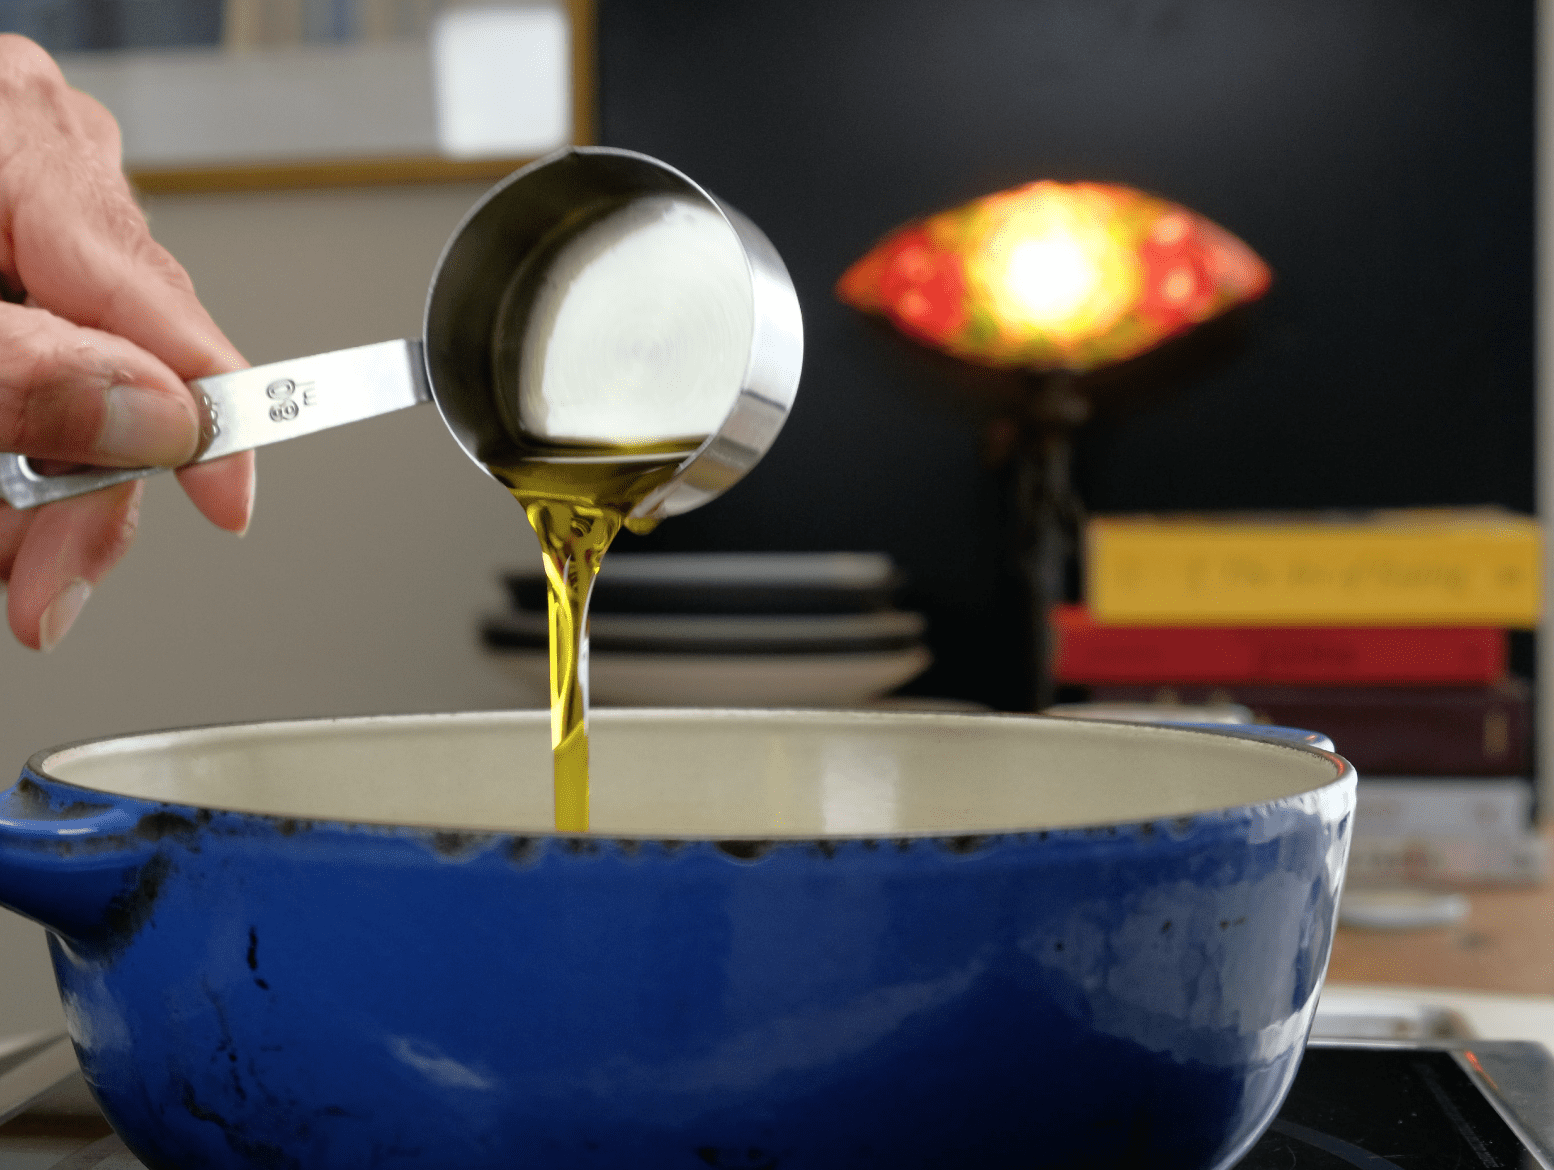 ADDING EXTRA VIRGIN OLIVE OIL TO PAN FOR KELP OIL FOR VEGAN TUNA